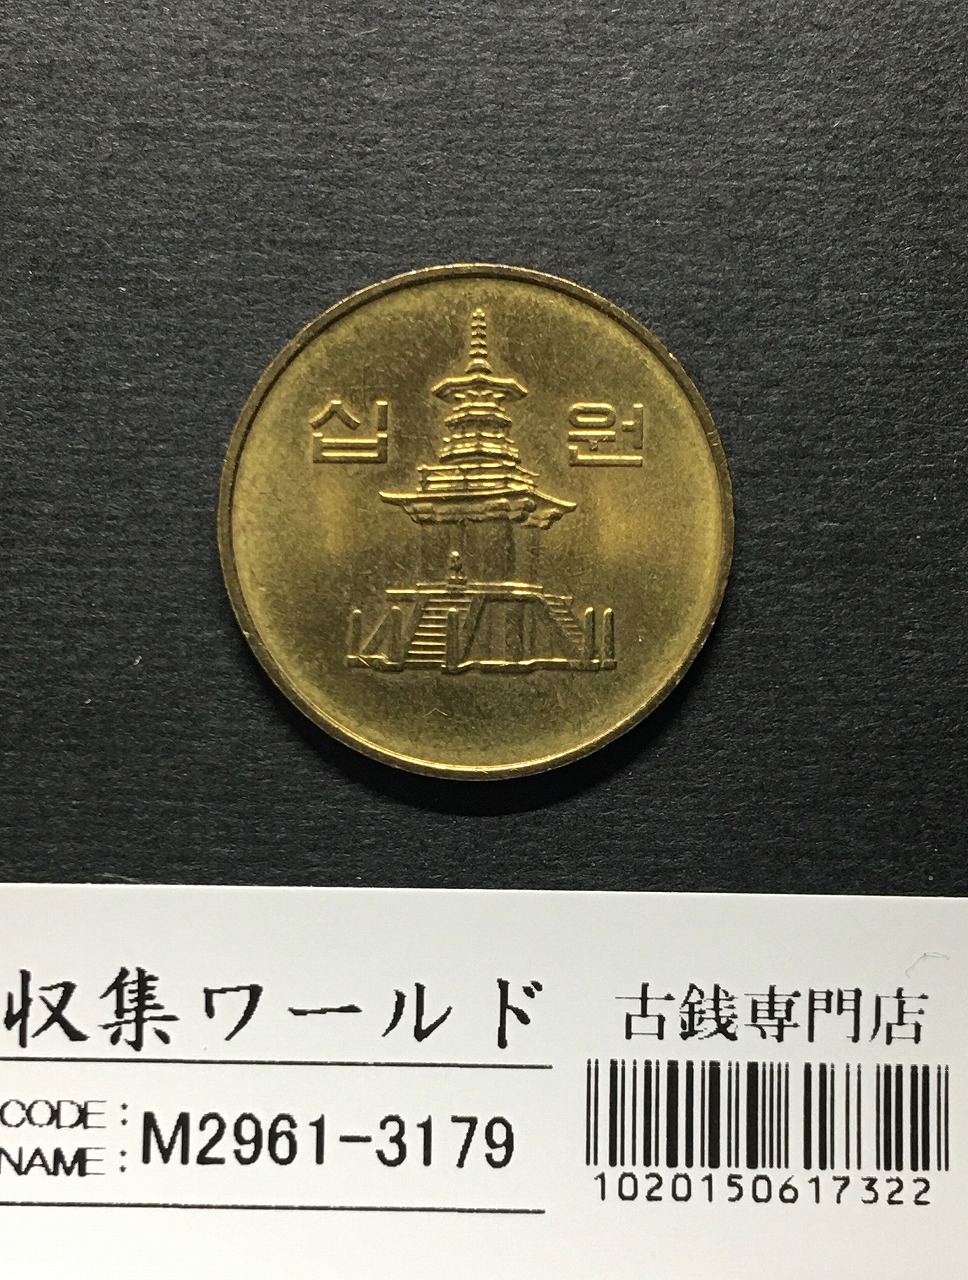 韓国銀行 10ウォン銅貨/多宝塔像 2001年銘版/10Won 極美品-3179